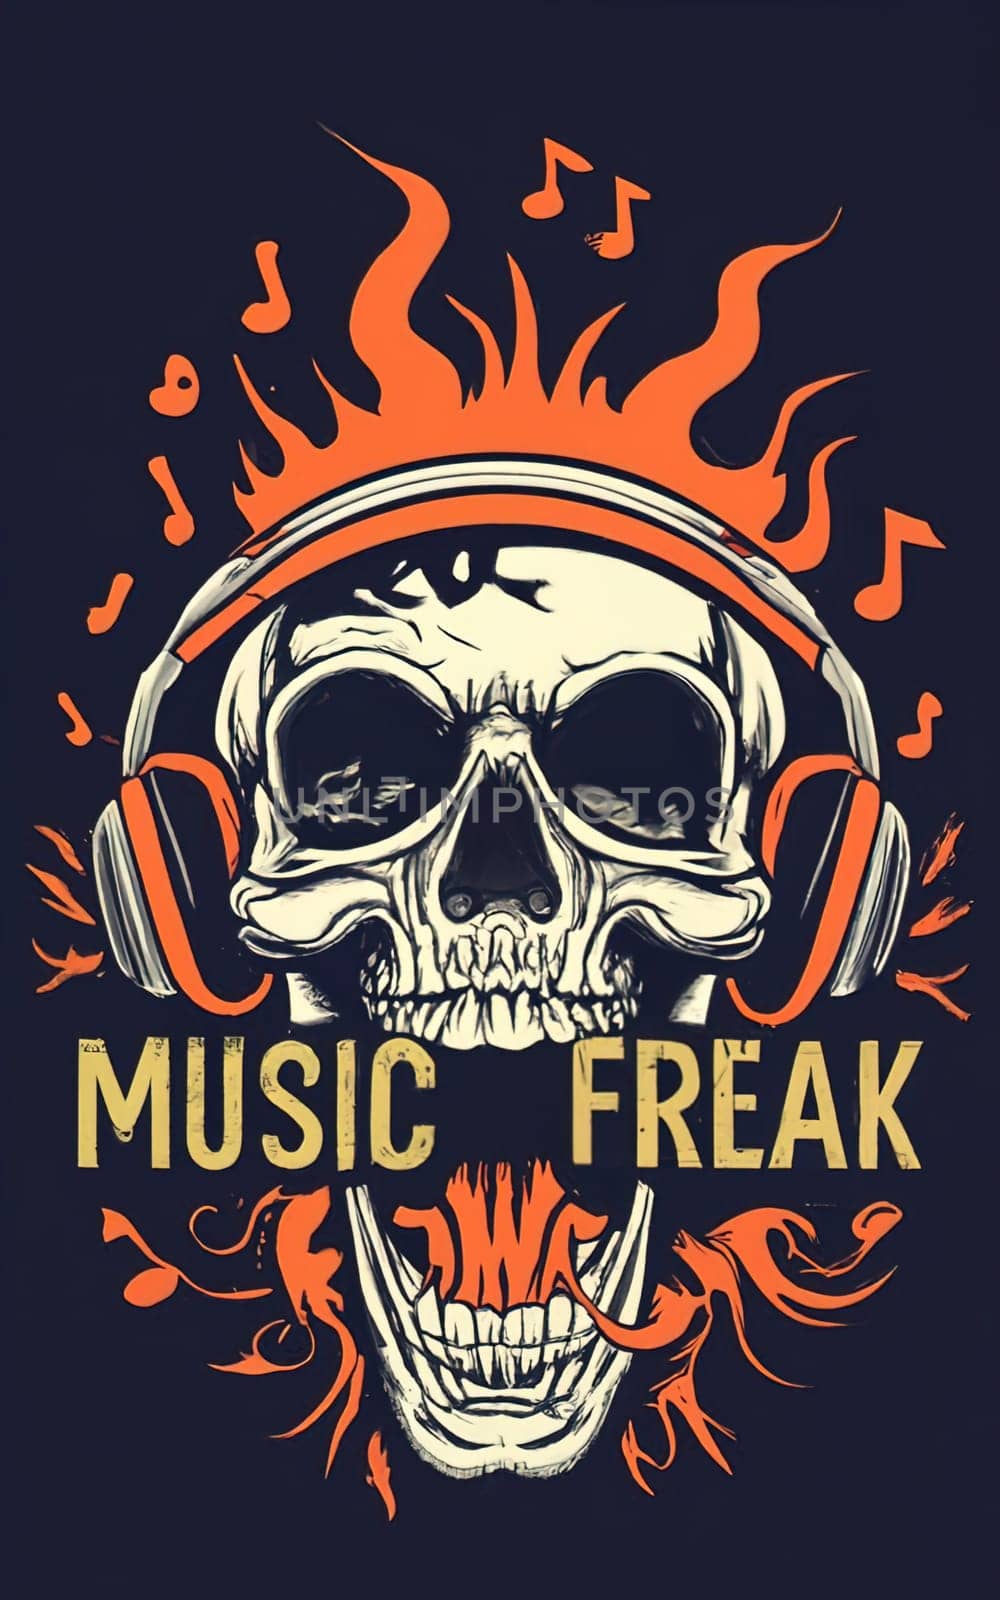 Terrifying Skull with Soul Emerging - 'Music Freak' Text on Black Background - T-Shirt Illustration by igor010